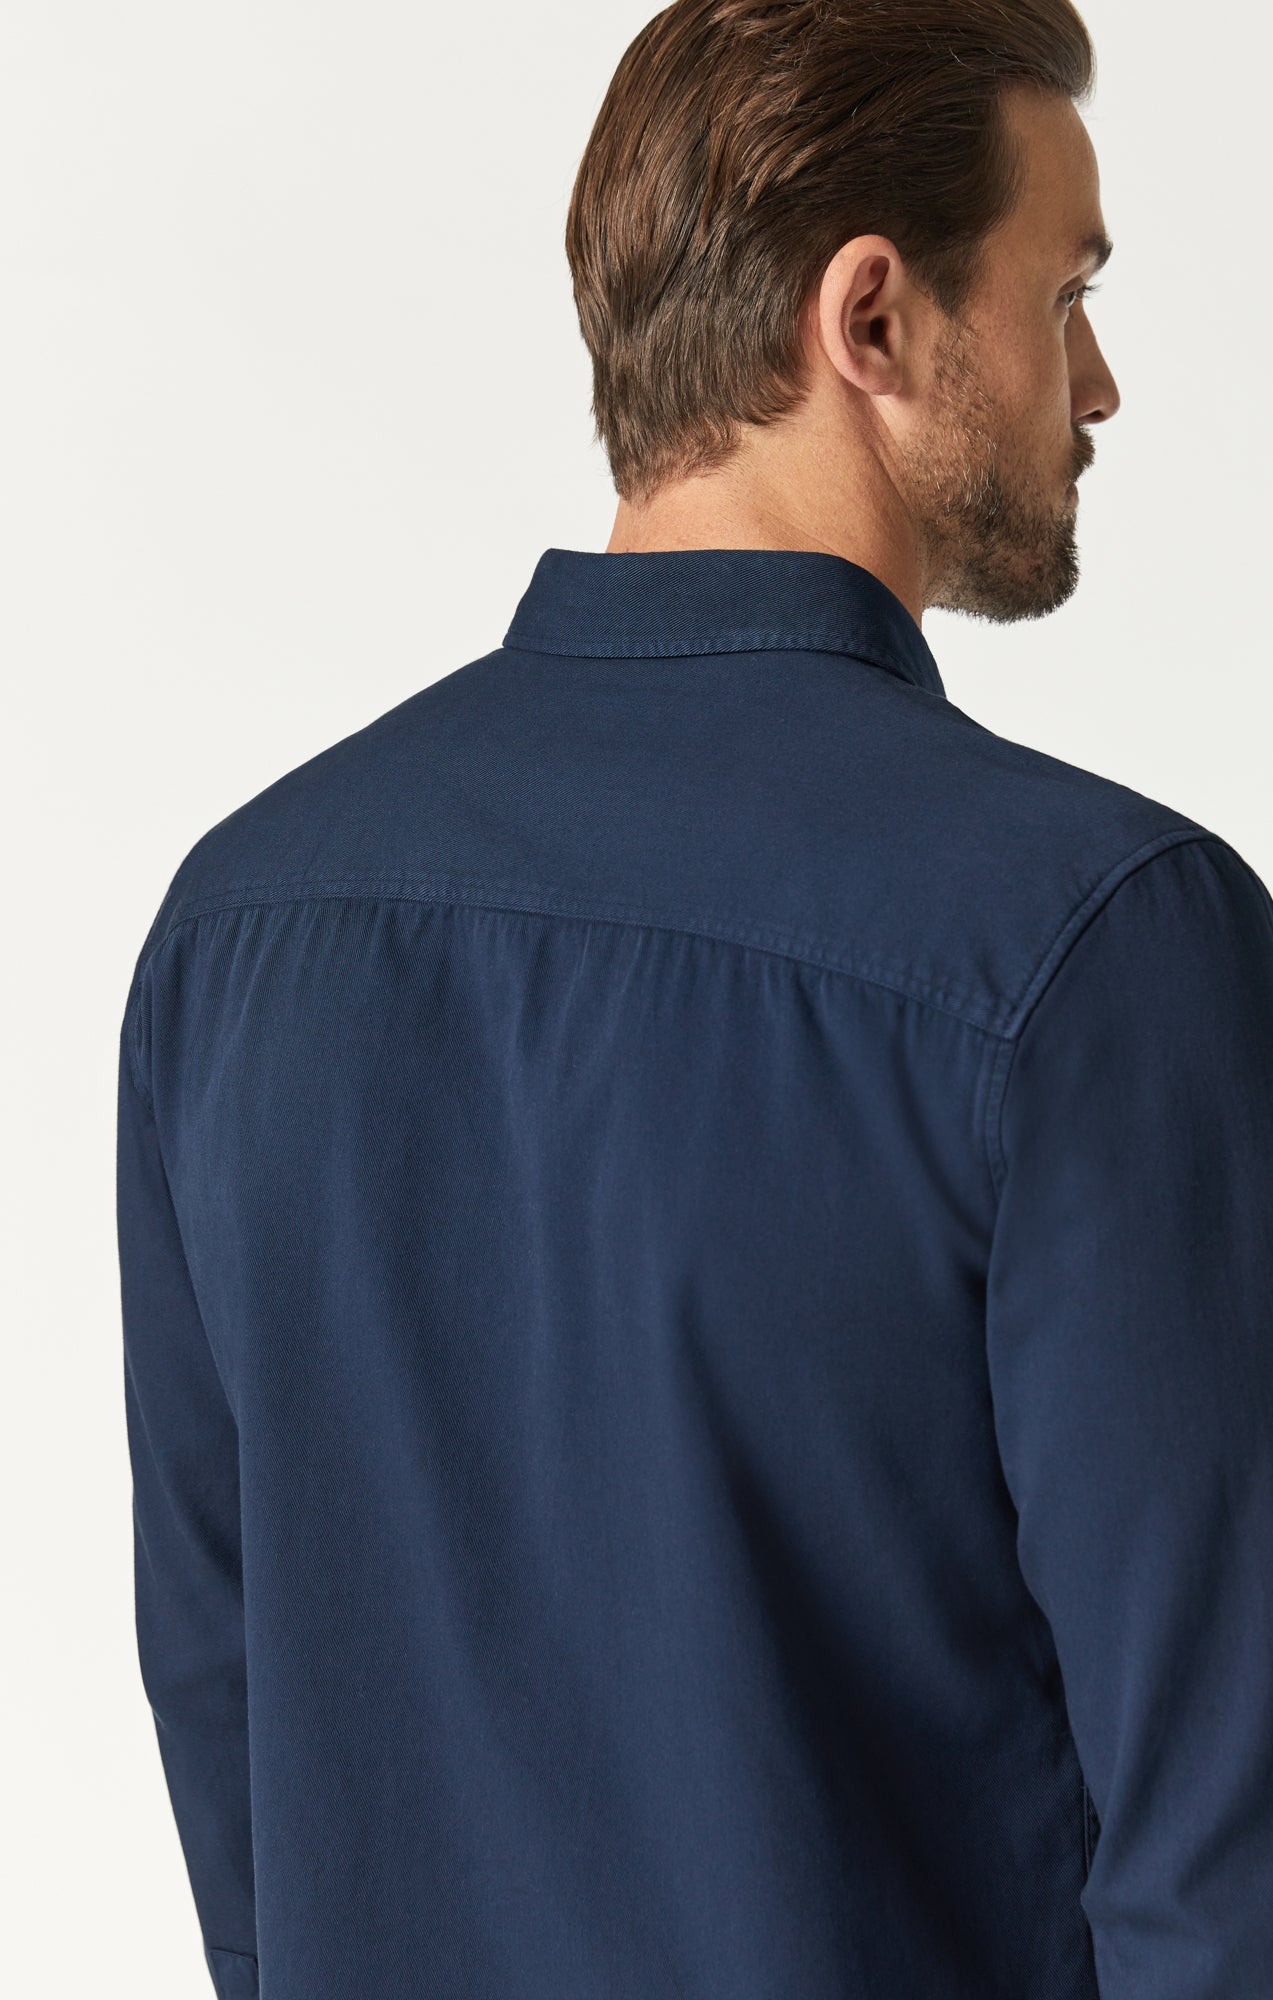 International Klein Blue - IKB Long Sleeve T Shirt by OZOA